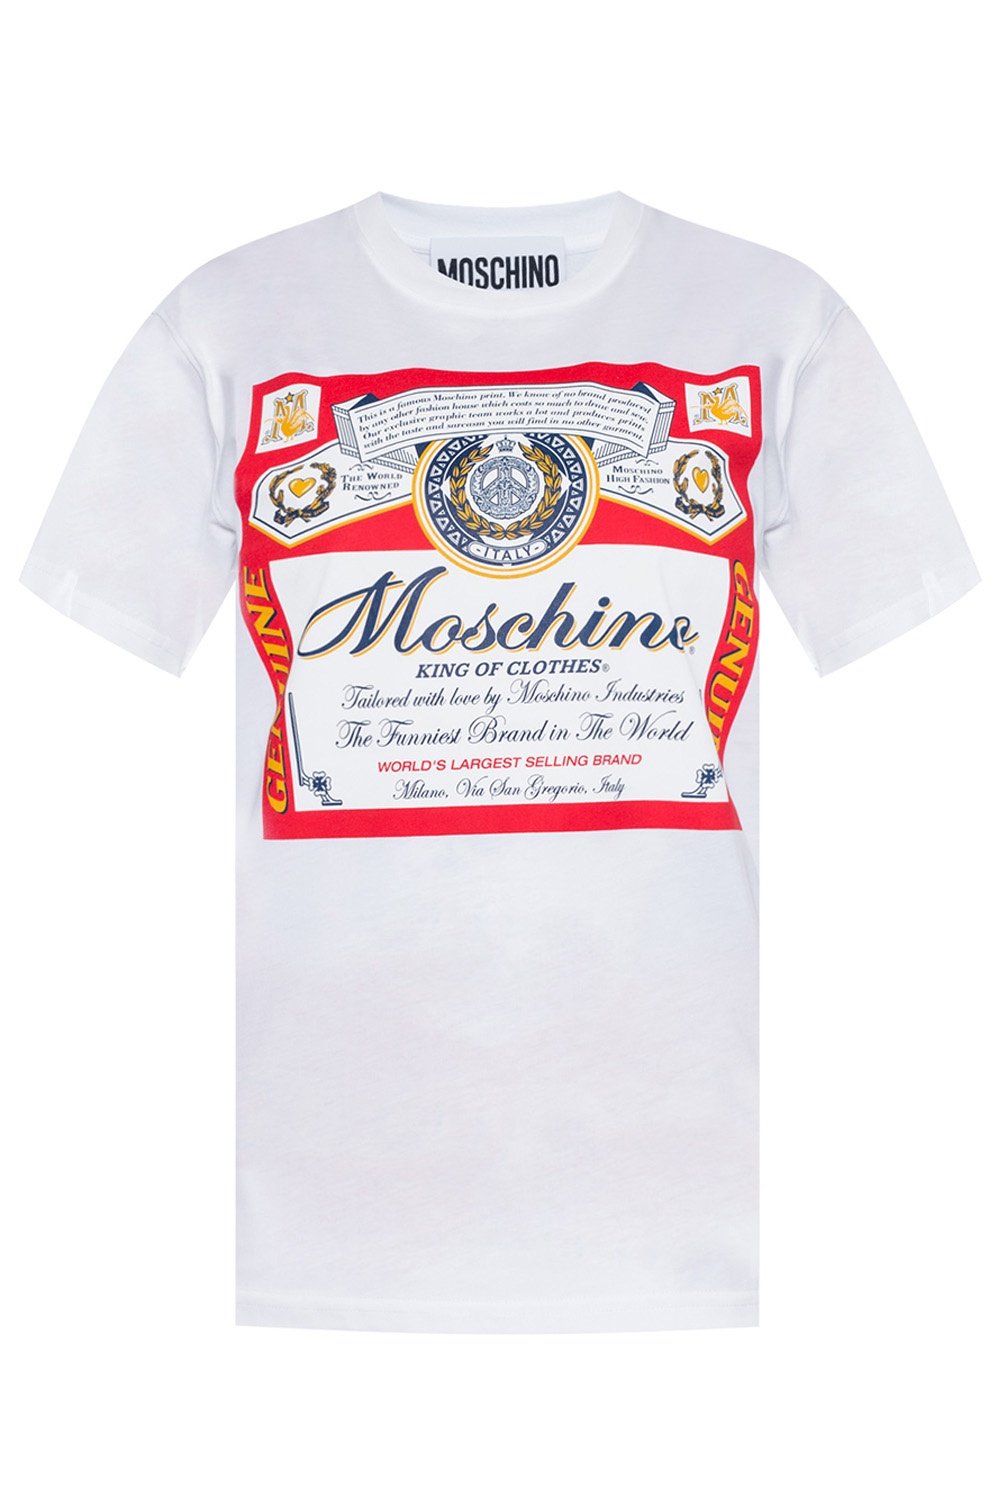 Details about   LOVE MOSCHINO Shirt M C 761 01 T 8671 blue 100% Cotton